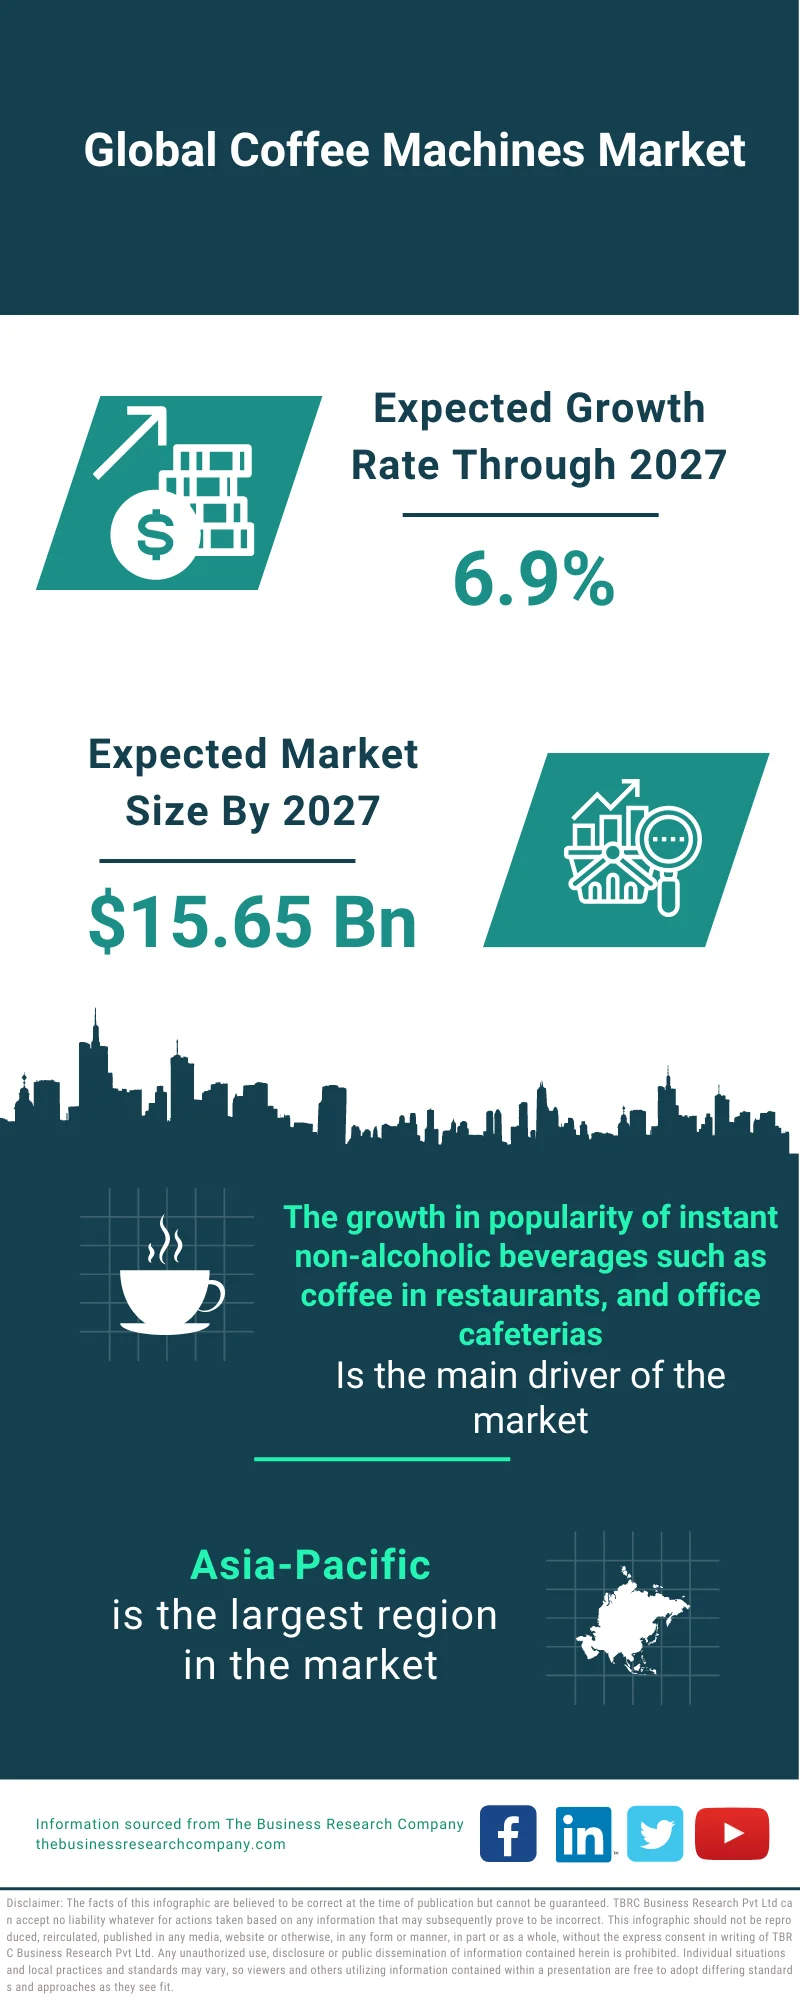 Smart Coffee Maker Market Size, Share, Demand, 2030